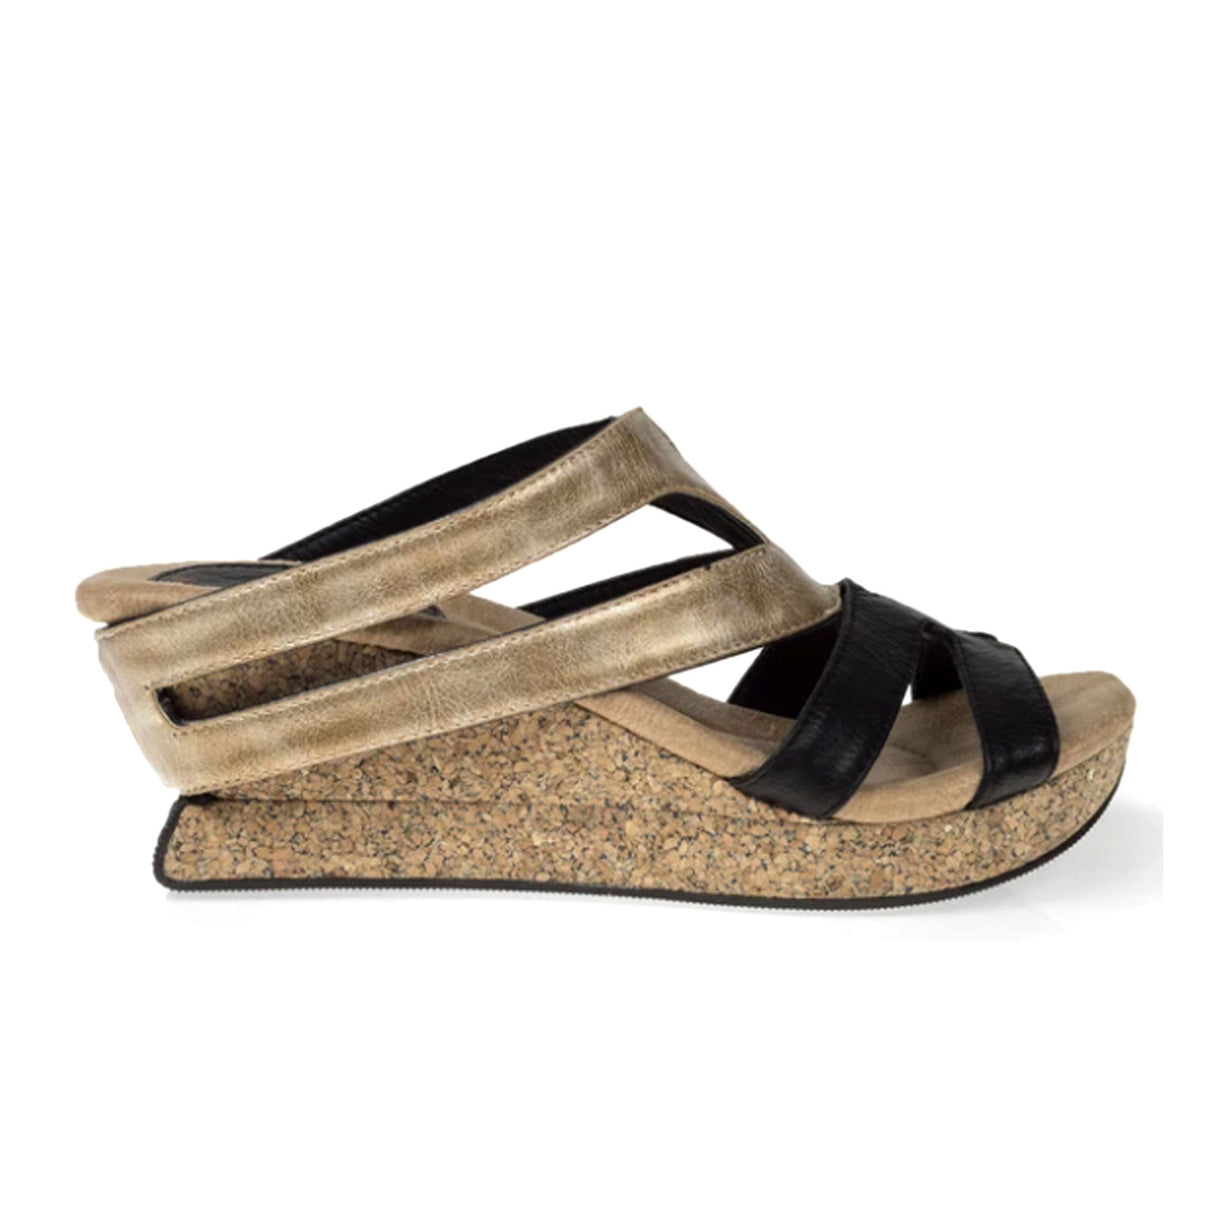 Modzori Alexa Reversible (Women) - Multi Sandals - Wedge - The Heel Shoe Fitters